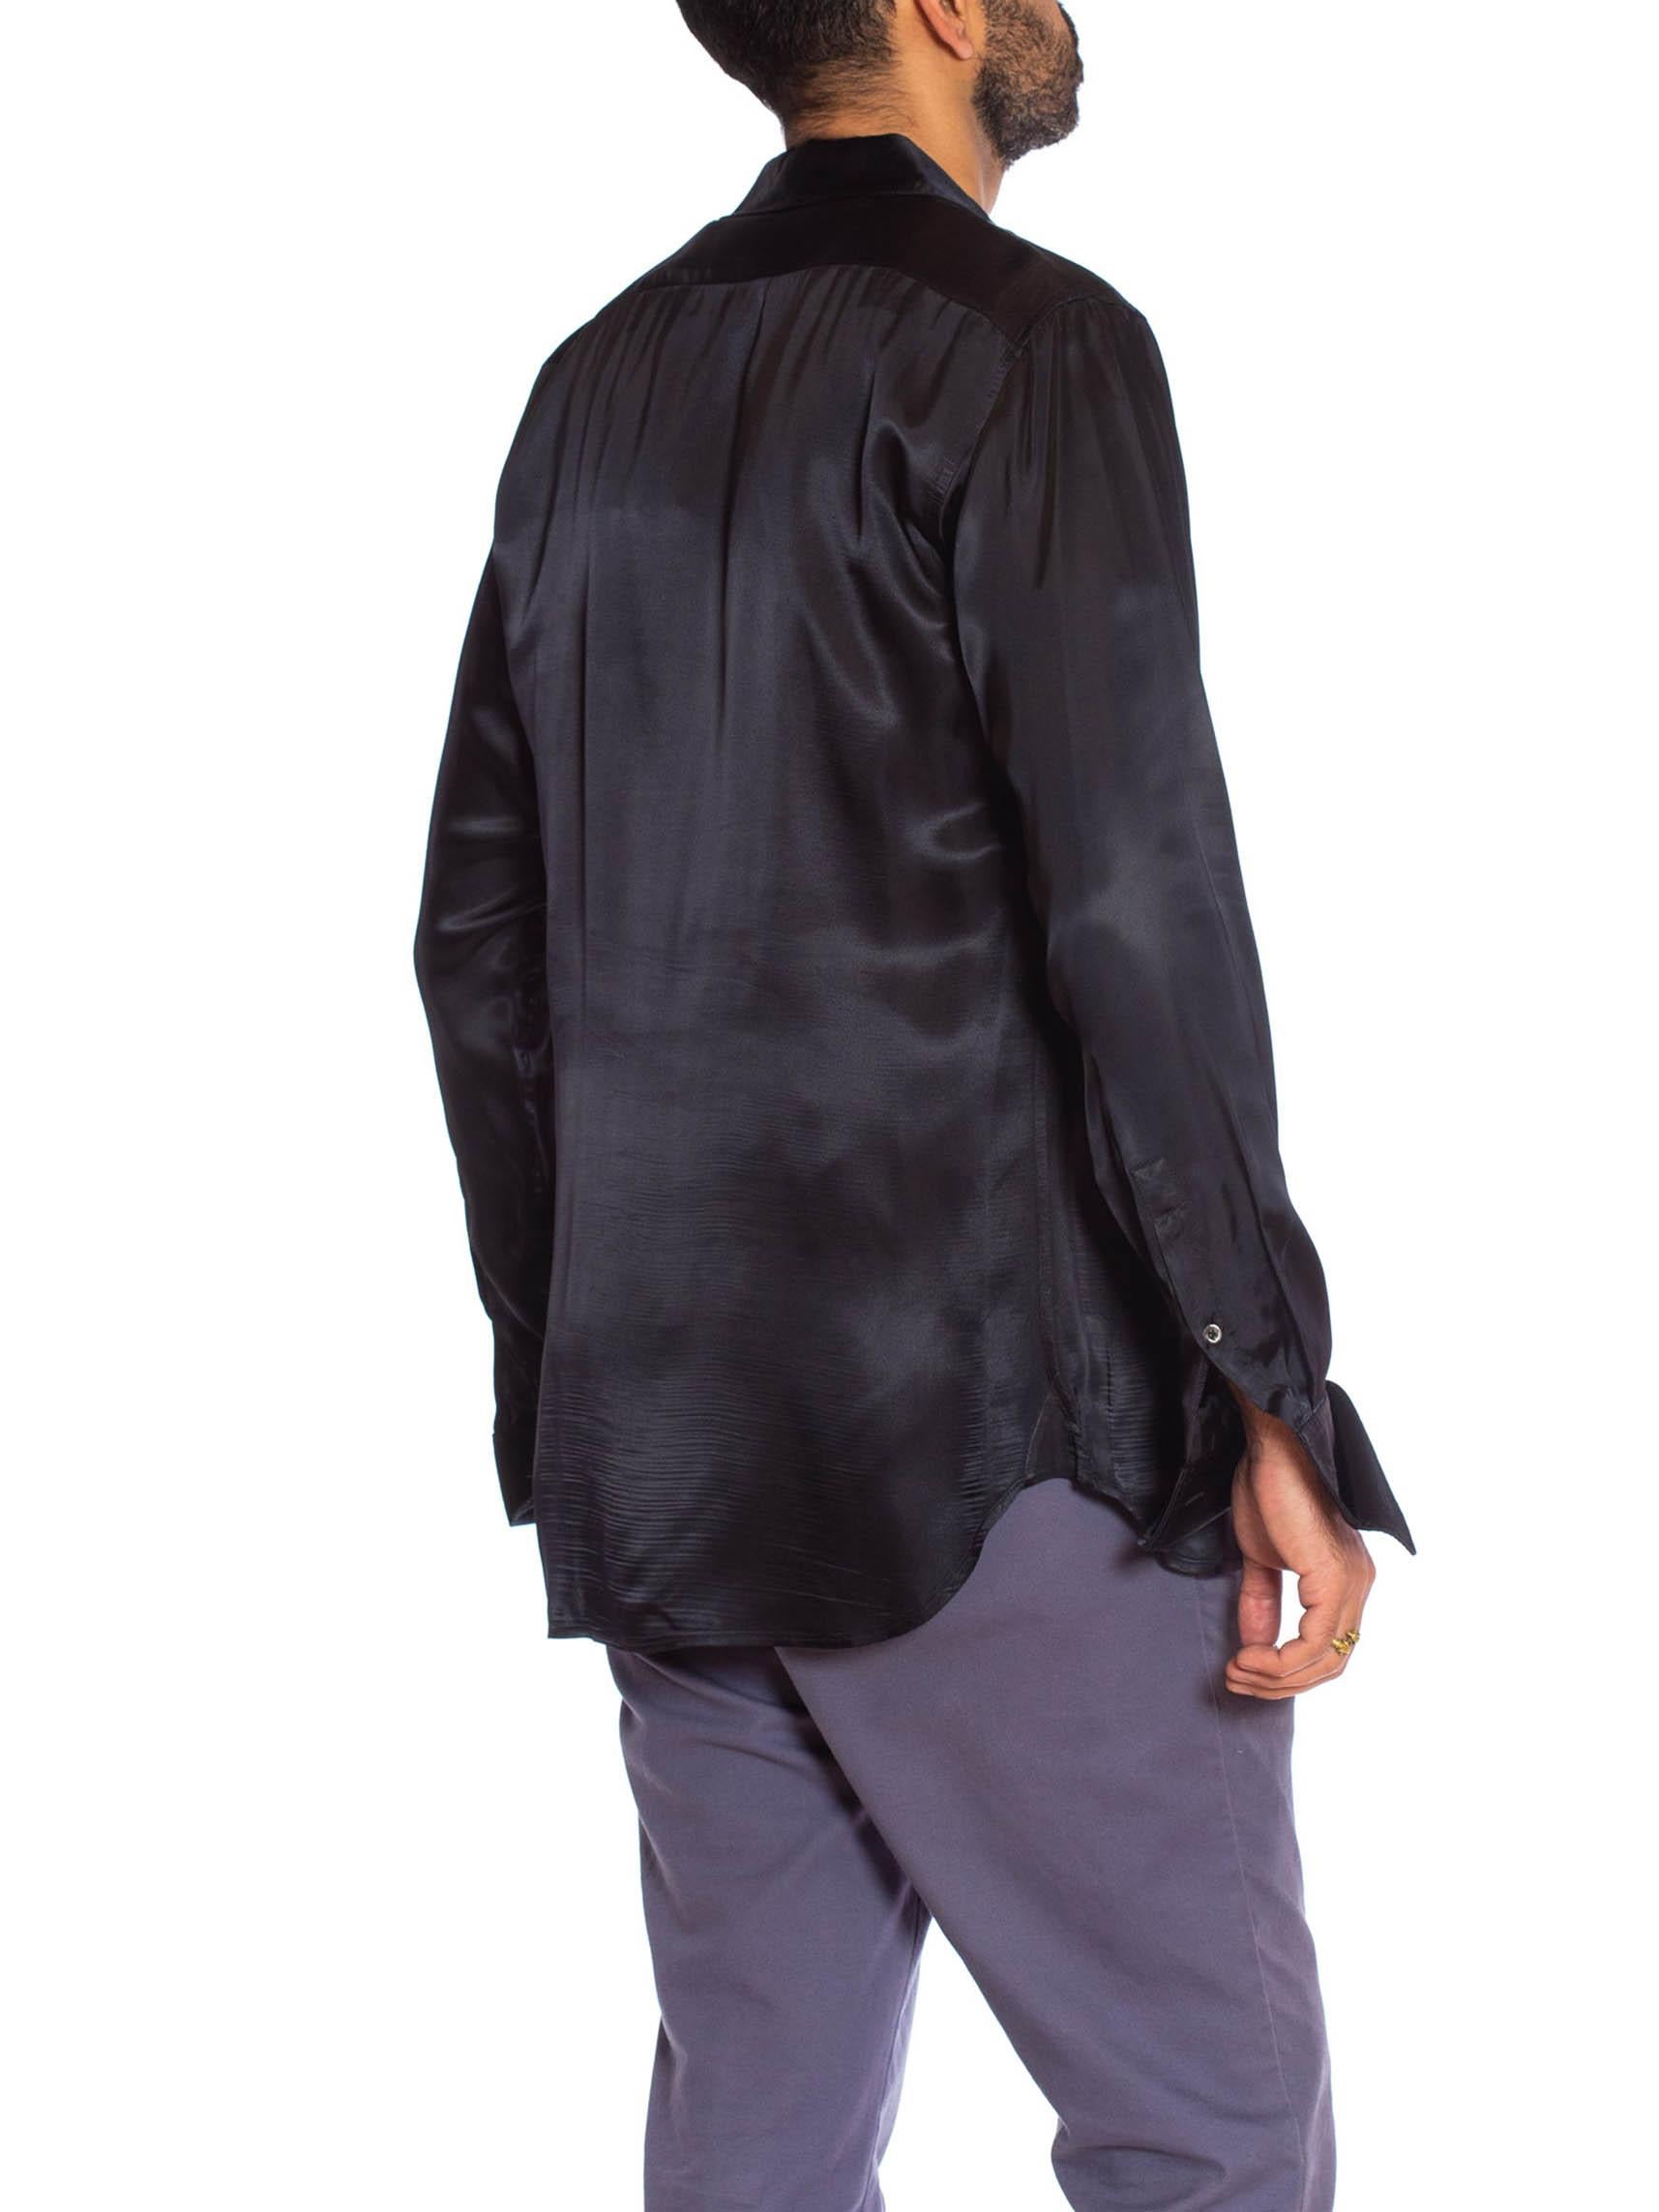 Men's 2000S JOHN GALLIANO Black Rayon Satin Formal Tuxedo Shirt With French Cuffs